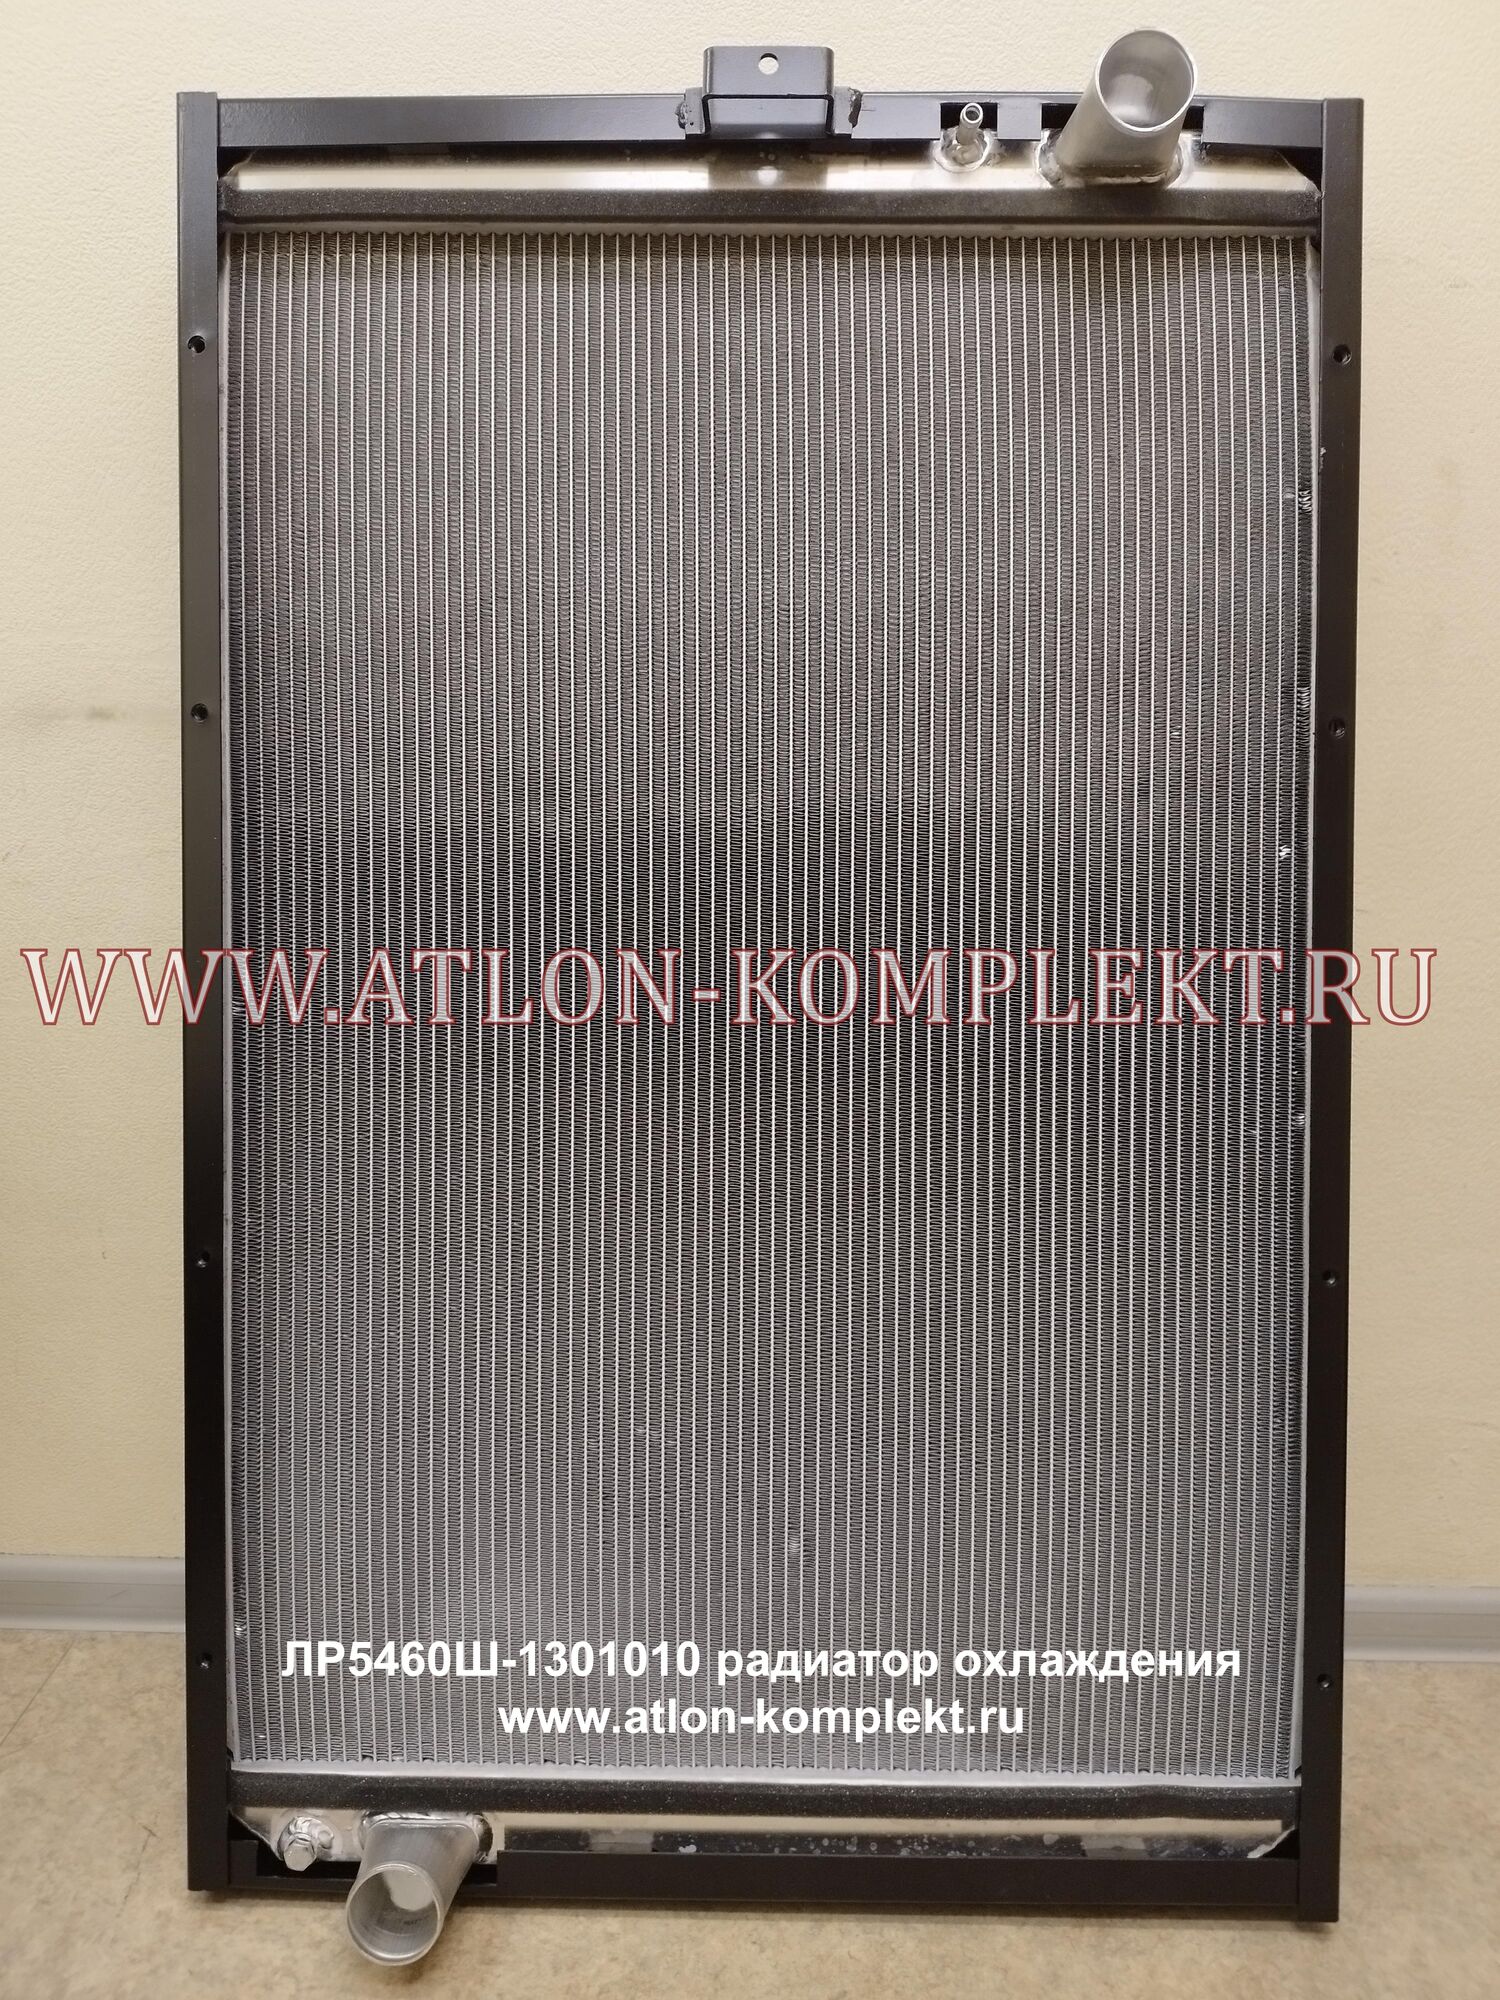 Радиатор для КАМАЗ-5460, КАМАЗ-6520, КАМАЗ-6460 с Cammins, 740 алюминиевый ЛР5460Ш-1301010